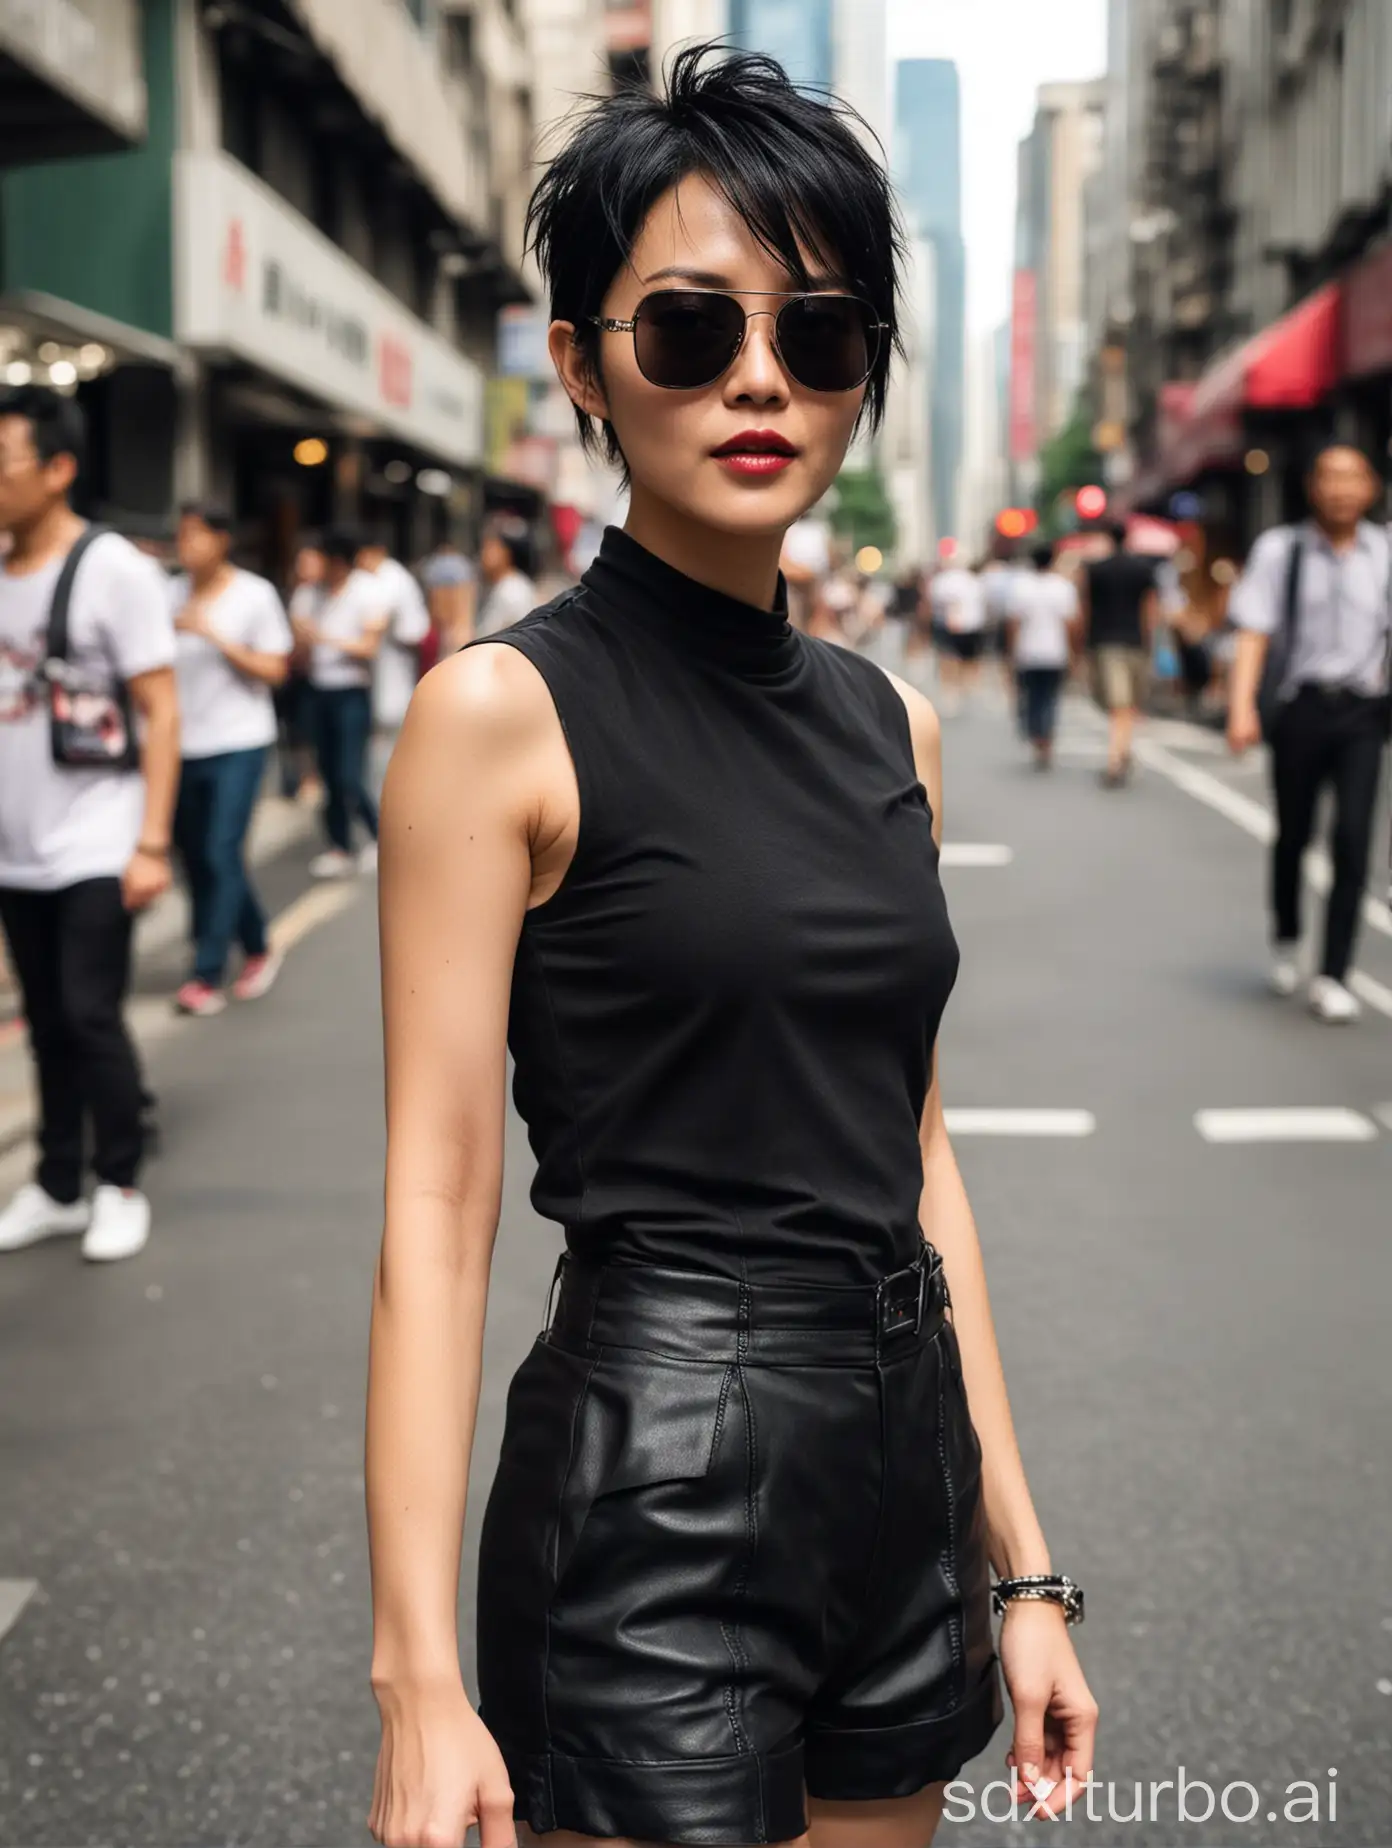 Faye Wong, 王菲, age 30, messy short hair, dark lipstick, sleeveless matrix inspired outfit, sunglasses, busy city sidewalk